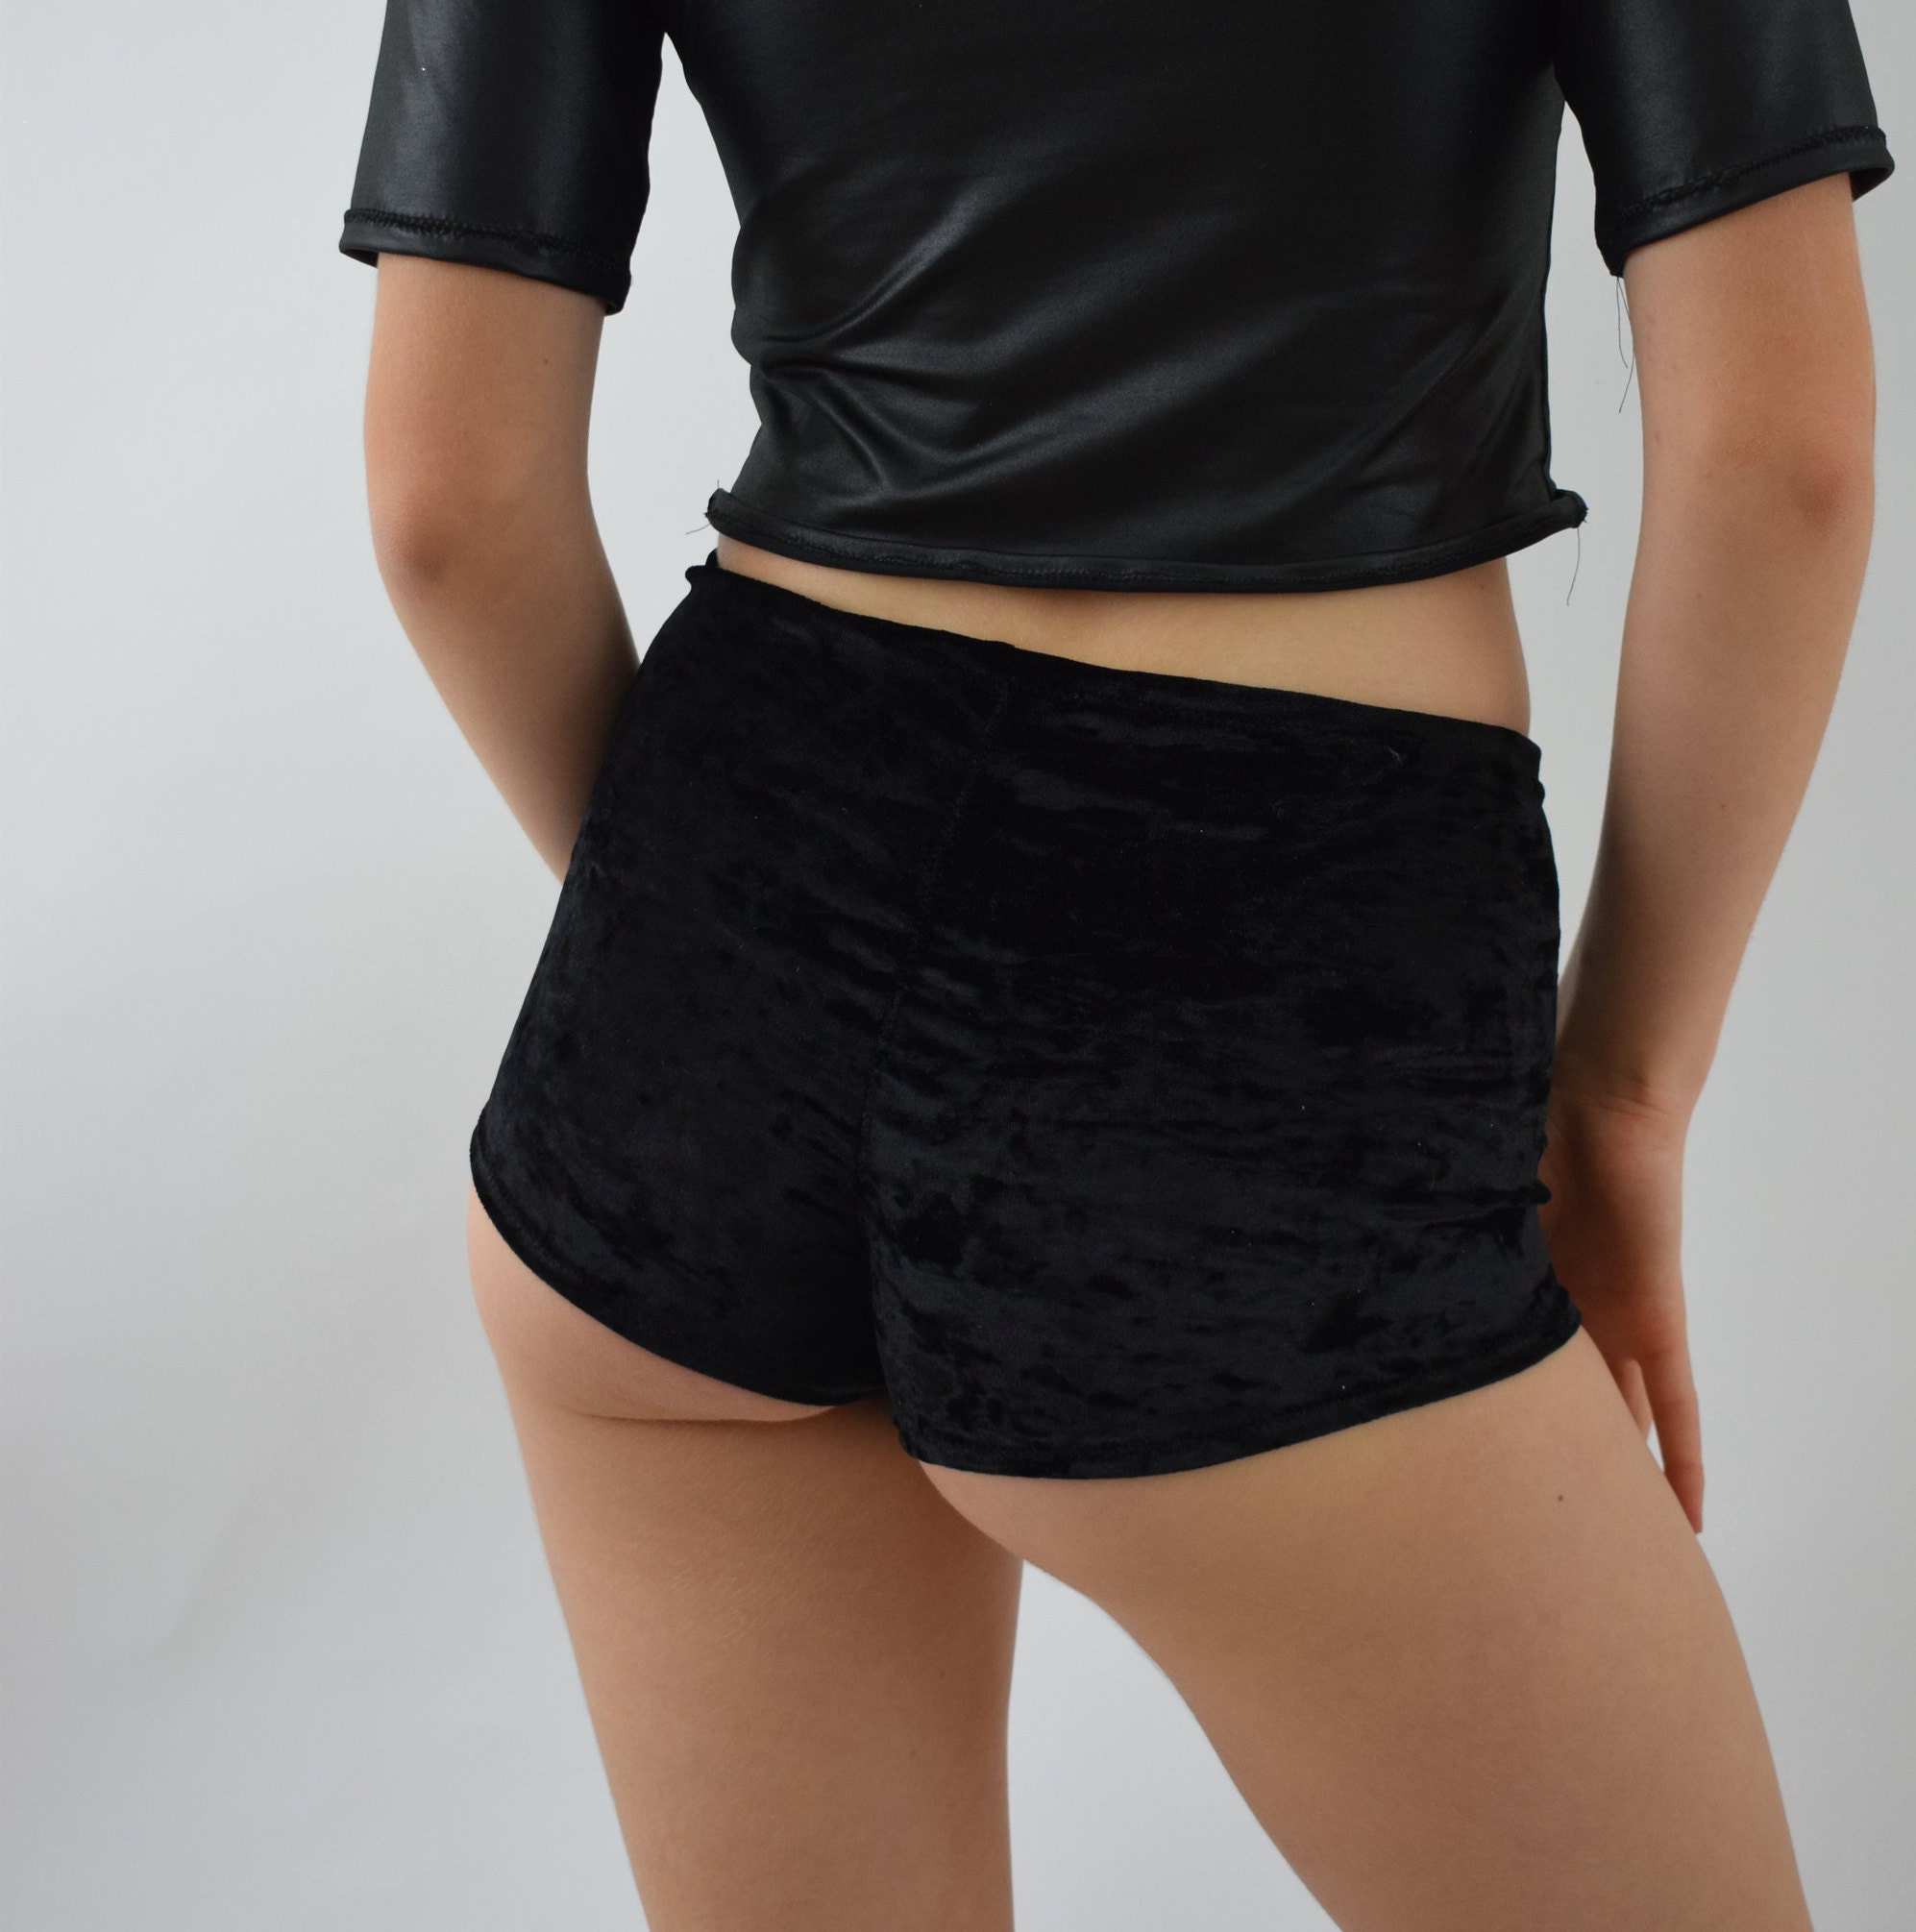 Hot Busty Firm Women In Skin Tight Booty Shorts